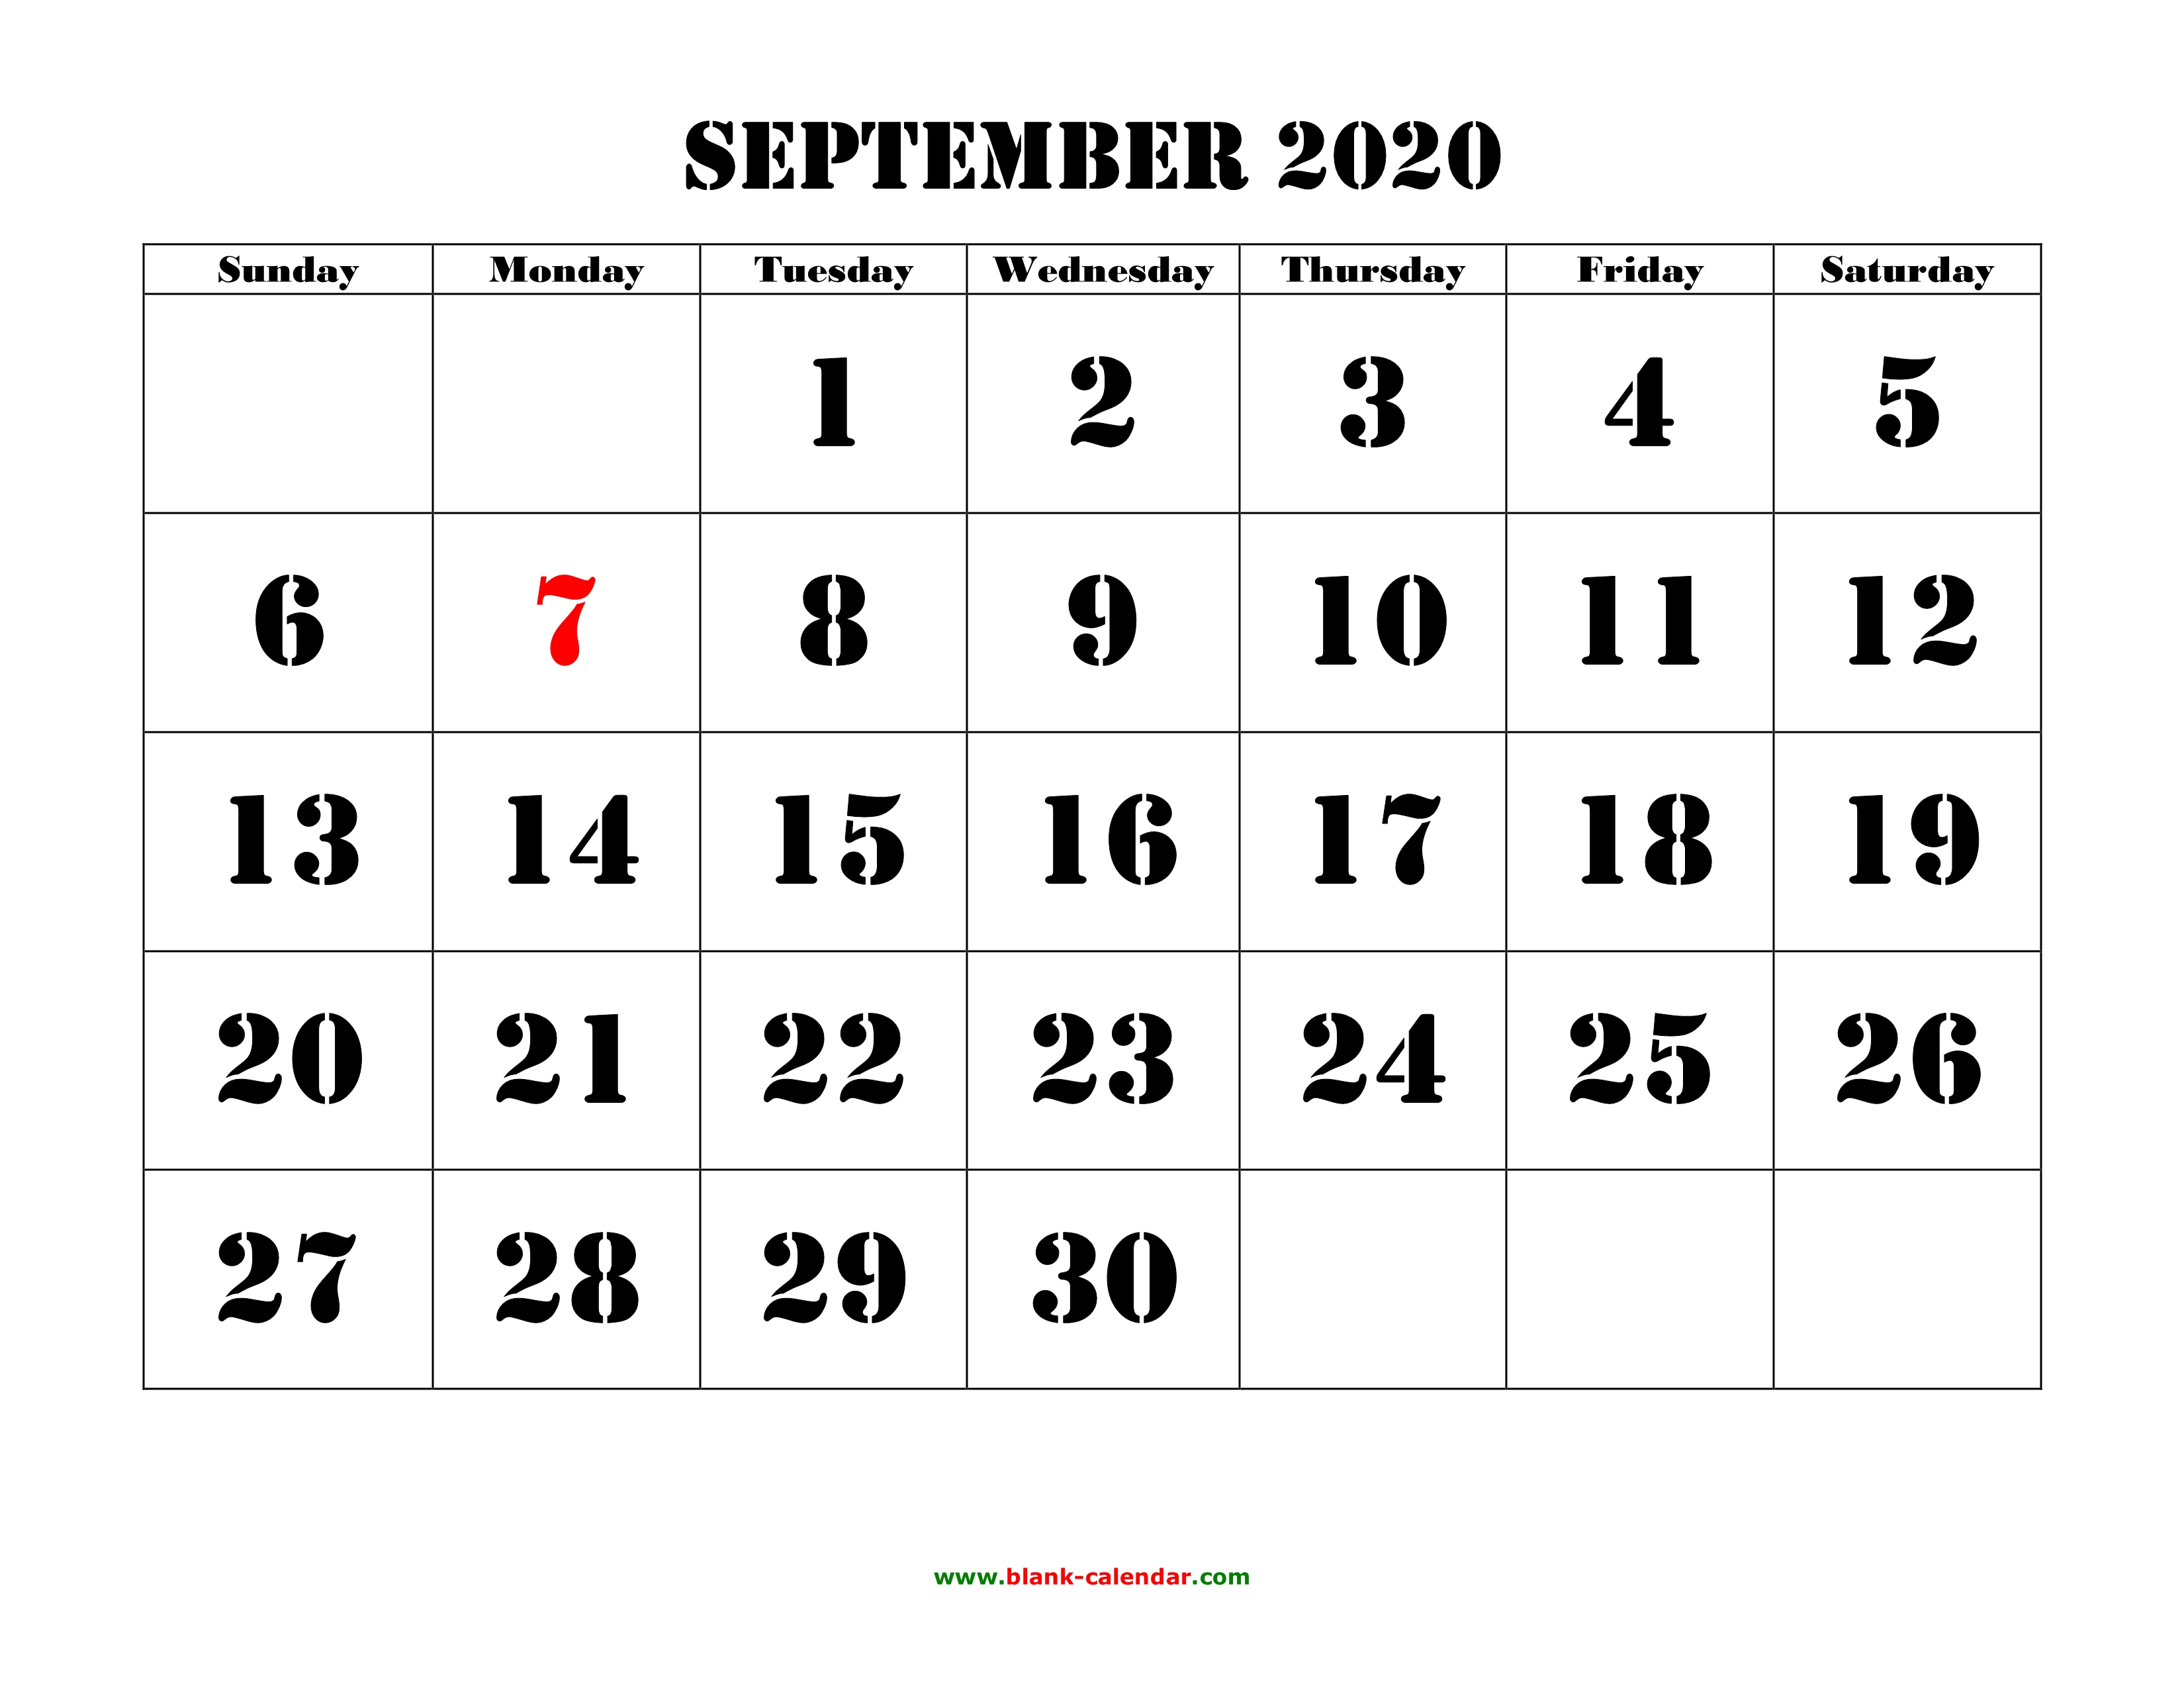 September 2020 Printable Calendar | Free Download Monthly Calendar Templates3300 x 2550